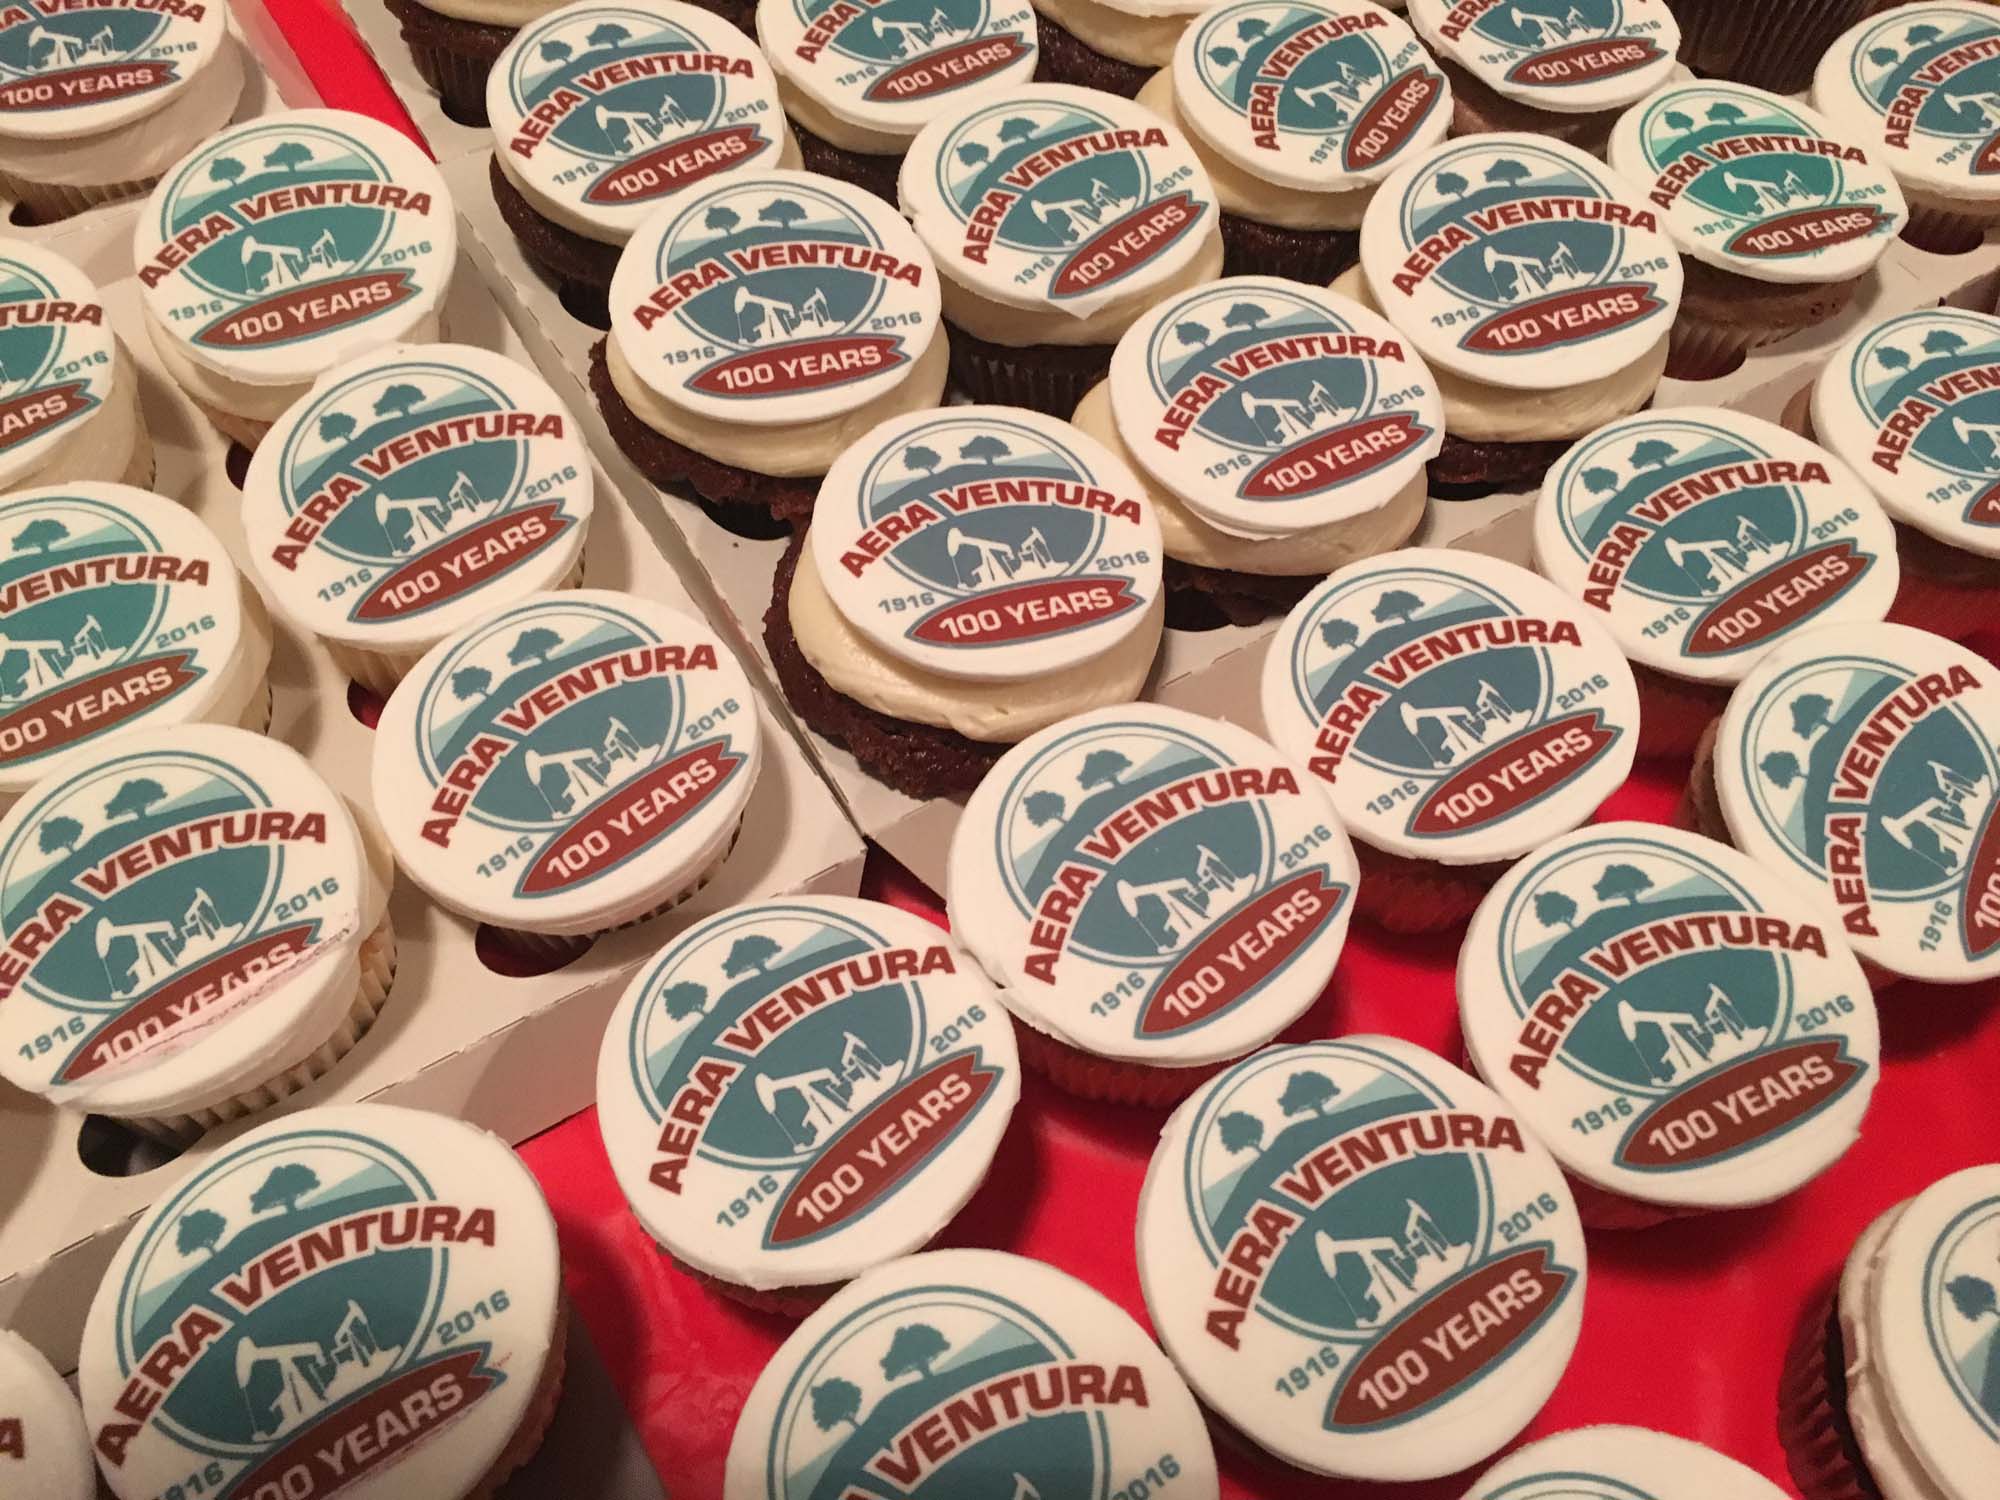 Aera made cupcakes to celebrate oil's 100 year presence in Ventura